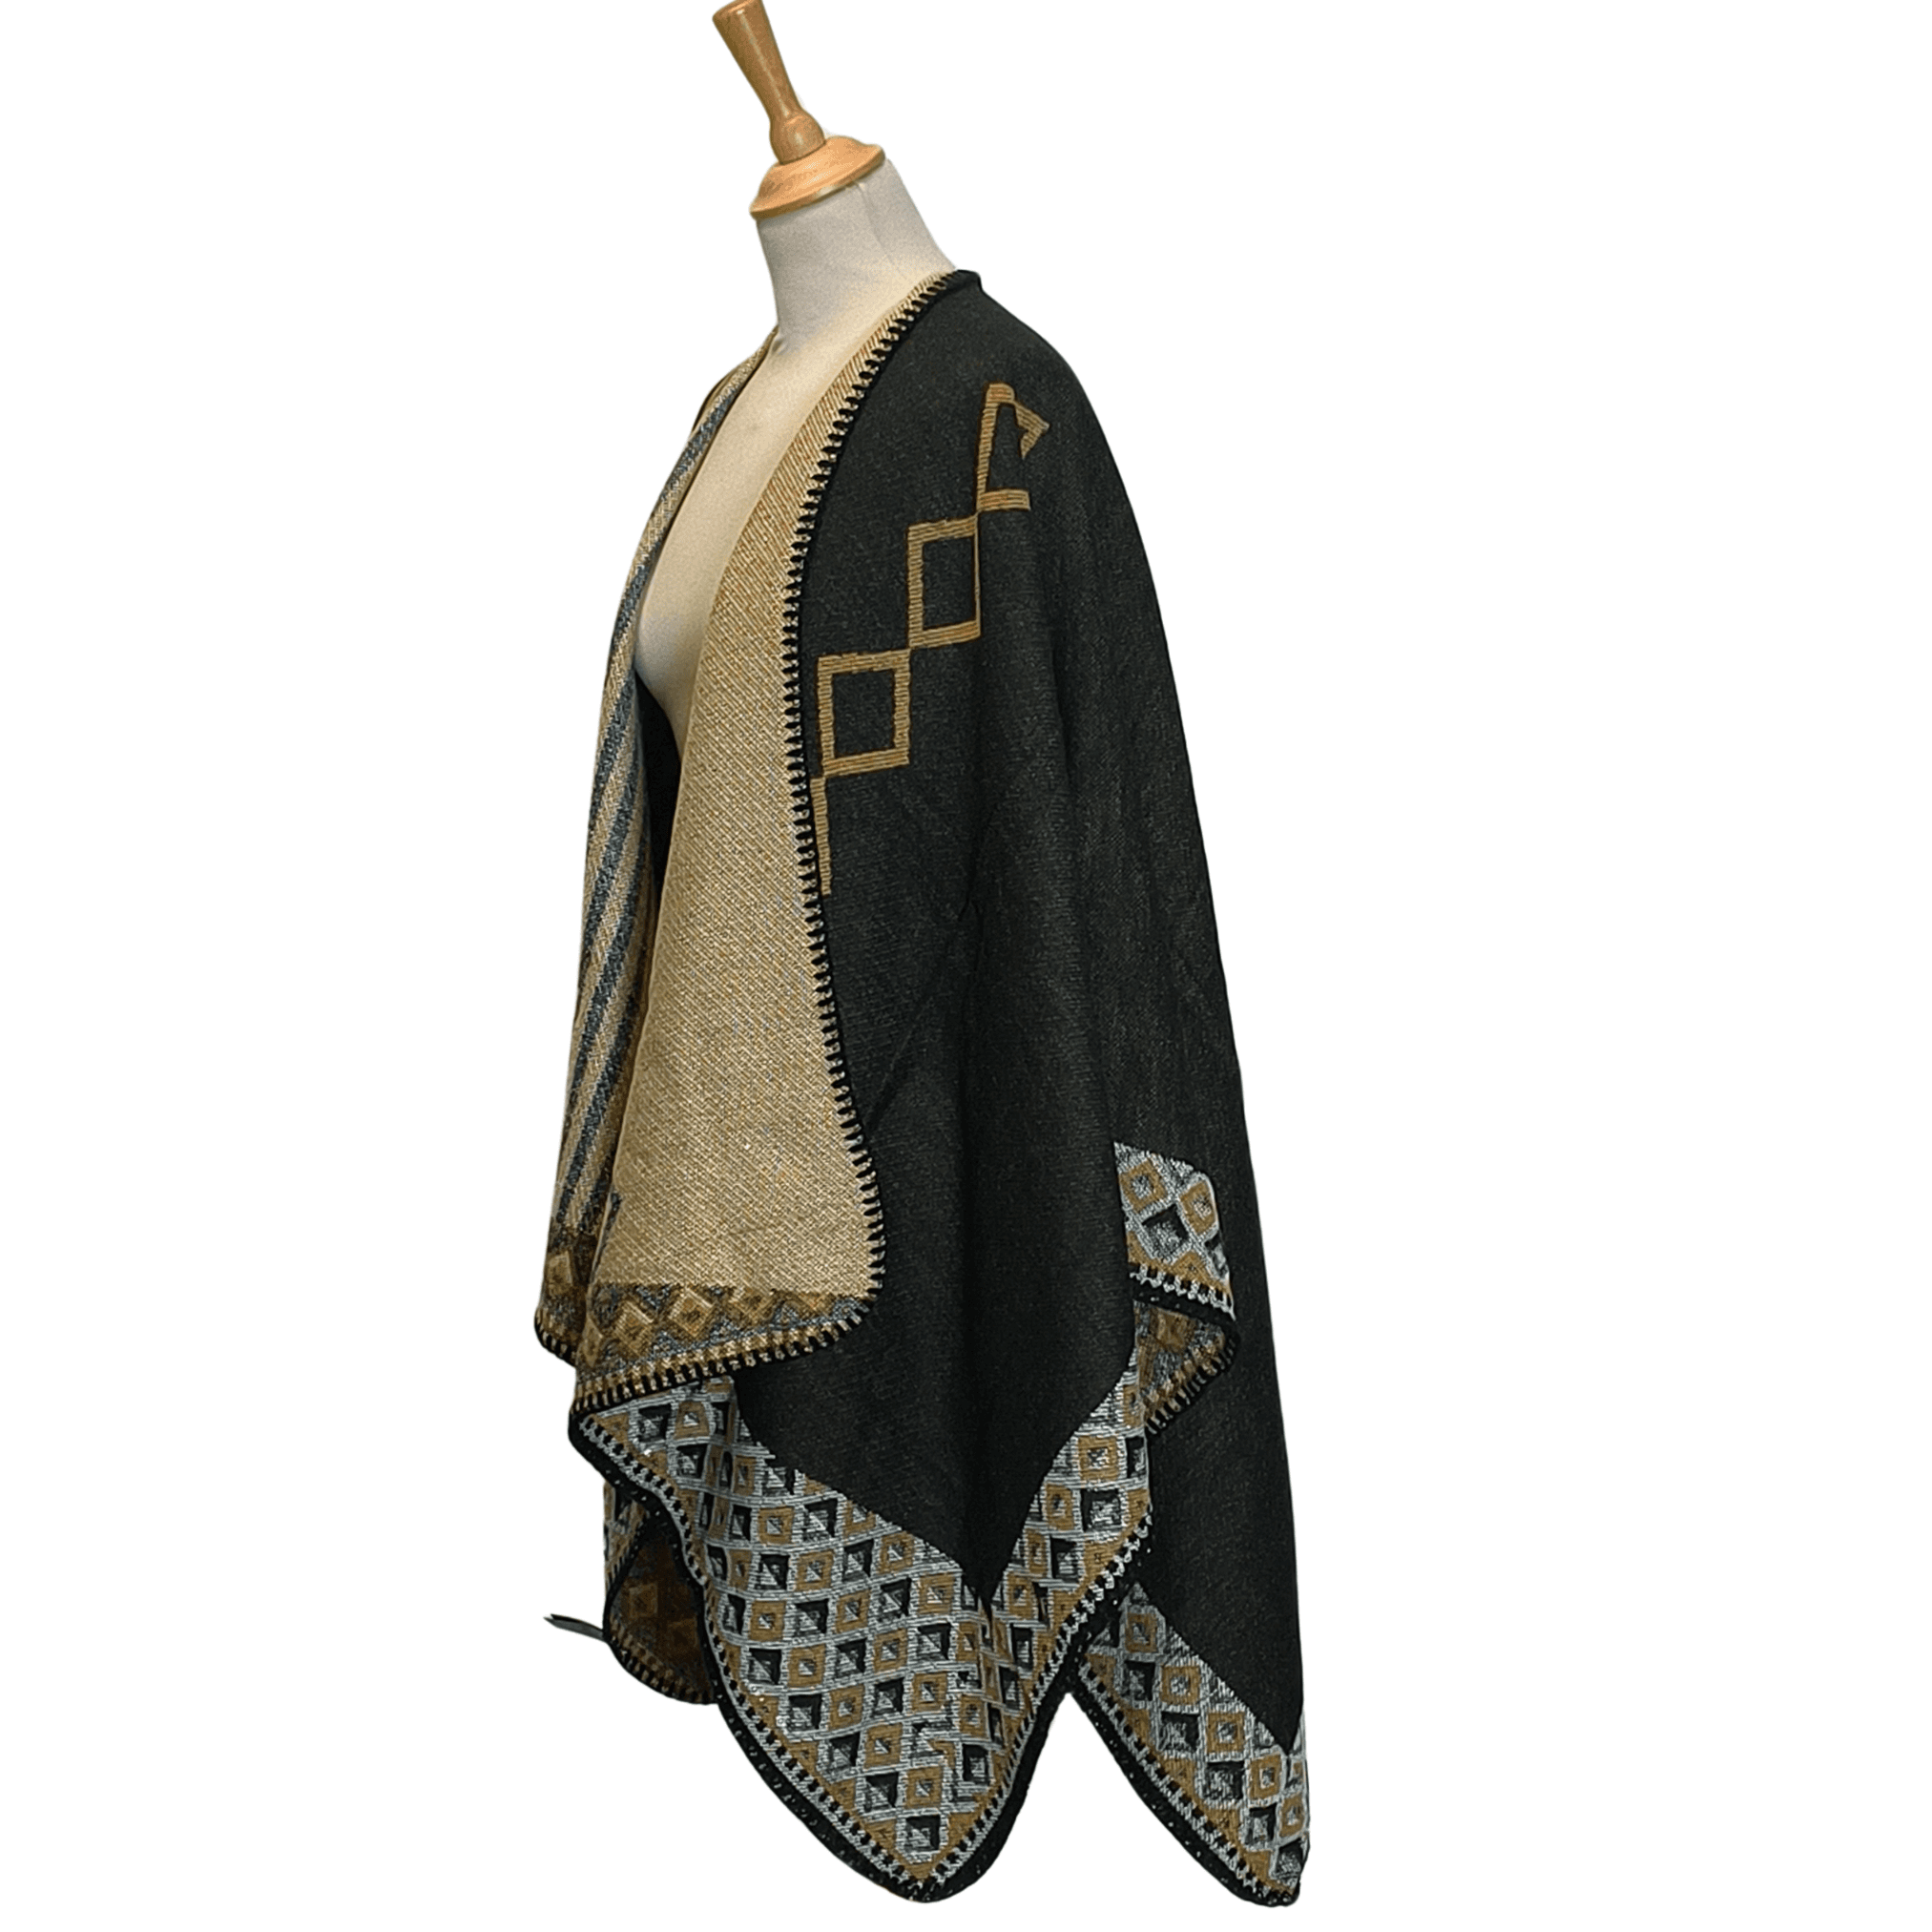 Poncho Apolline - shawl